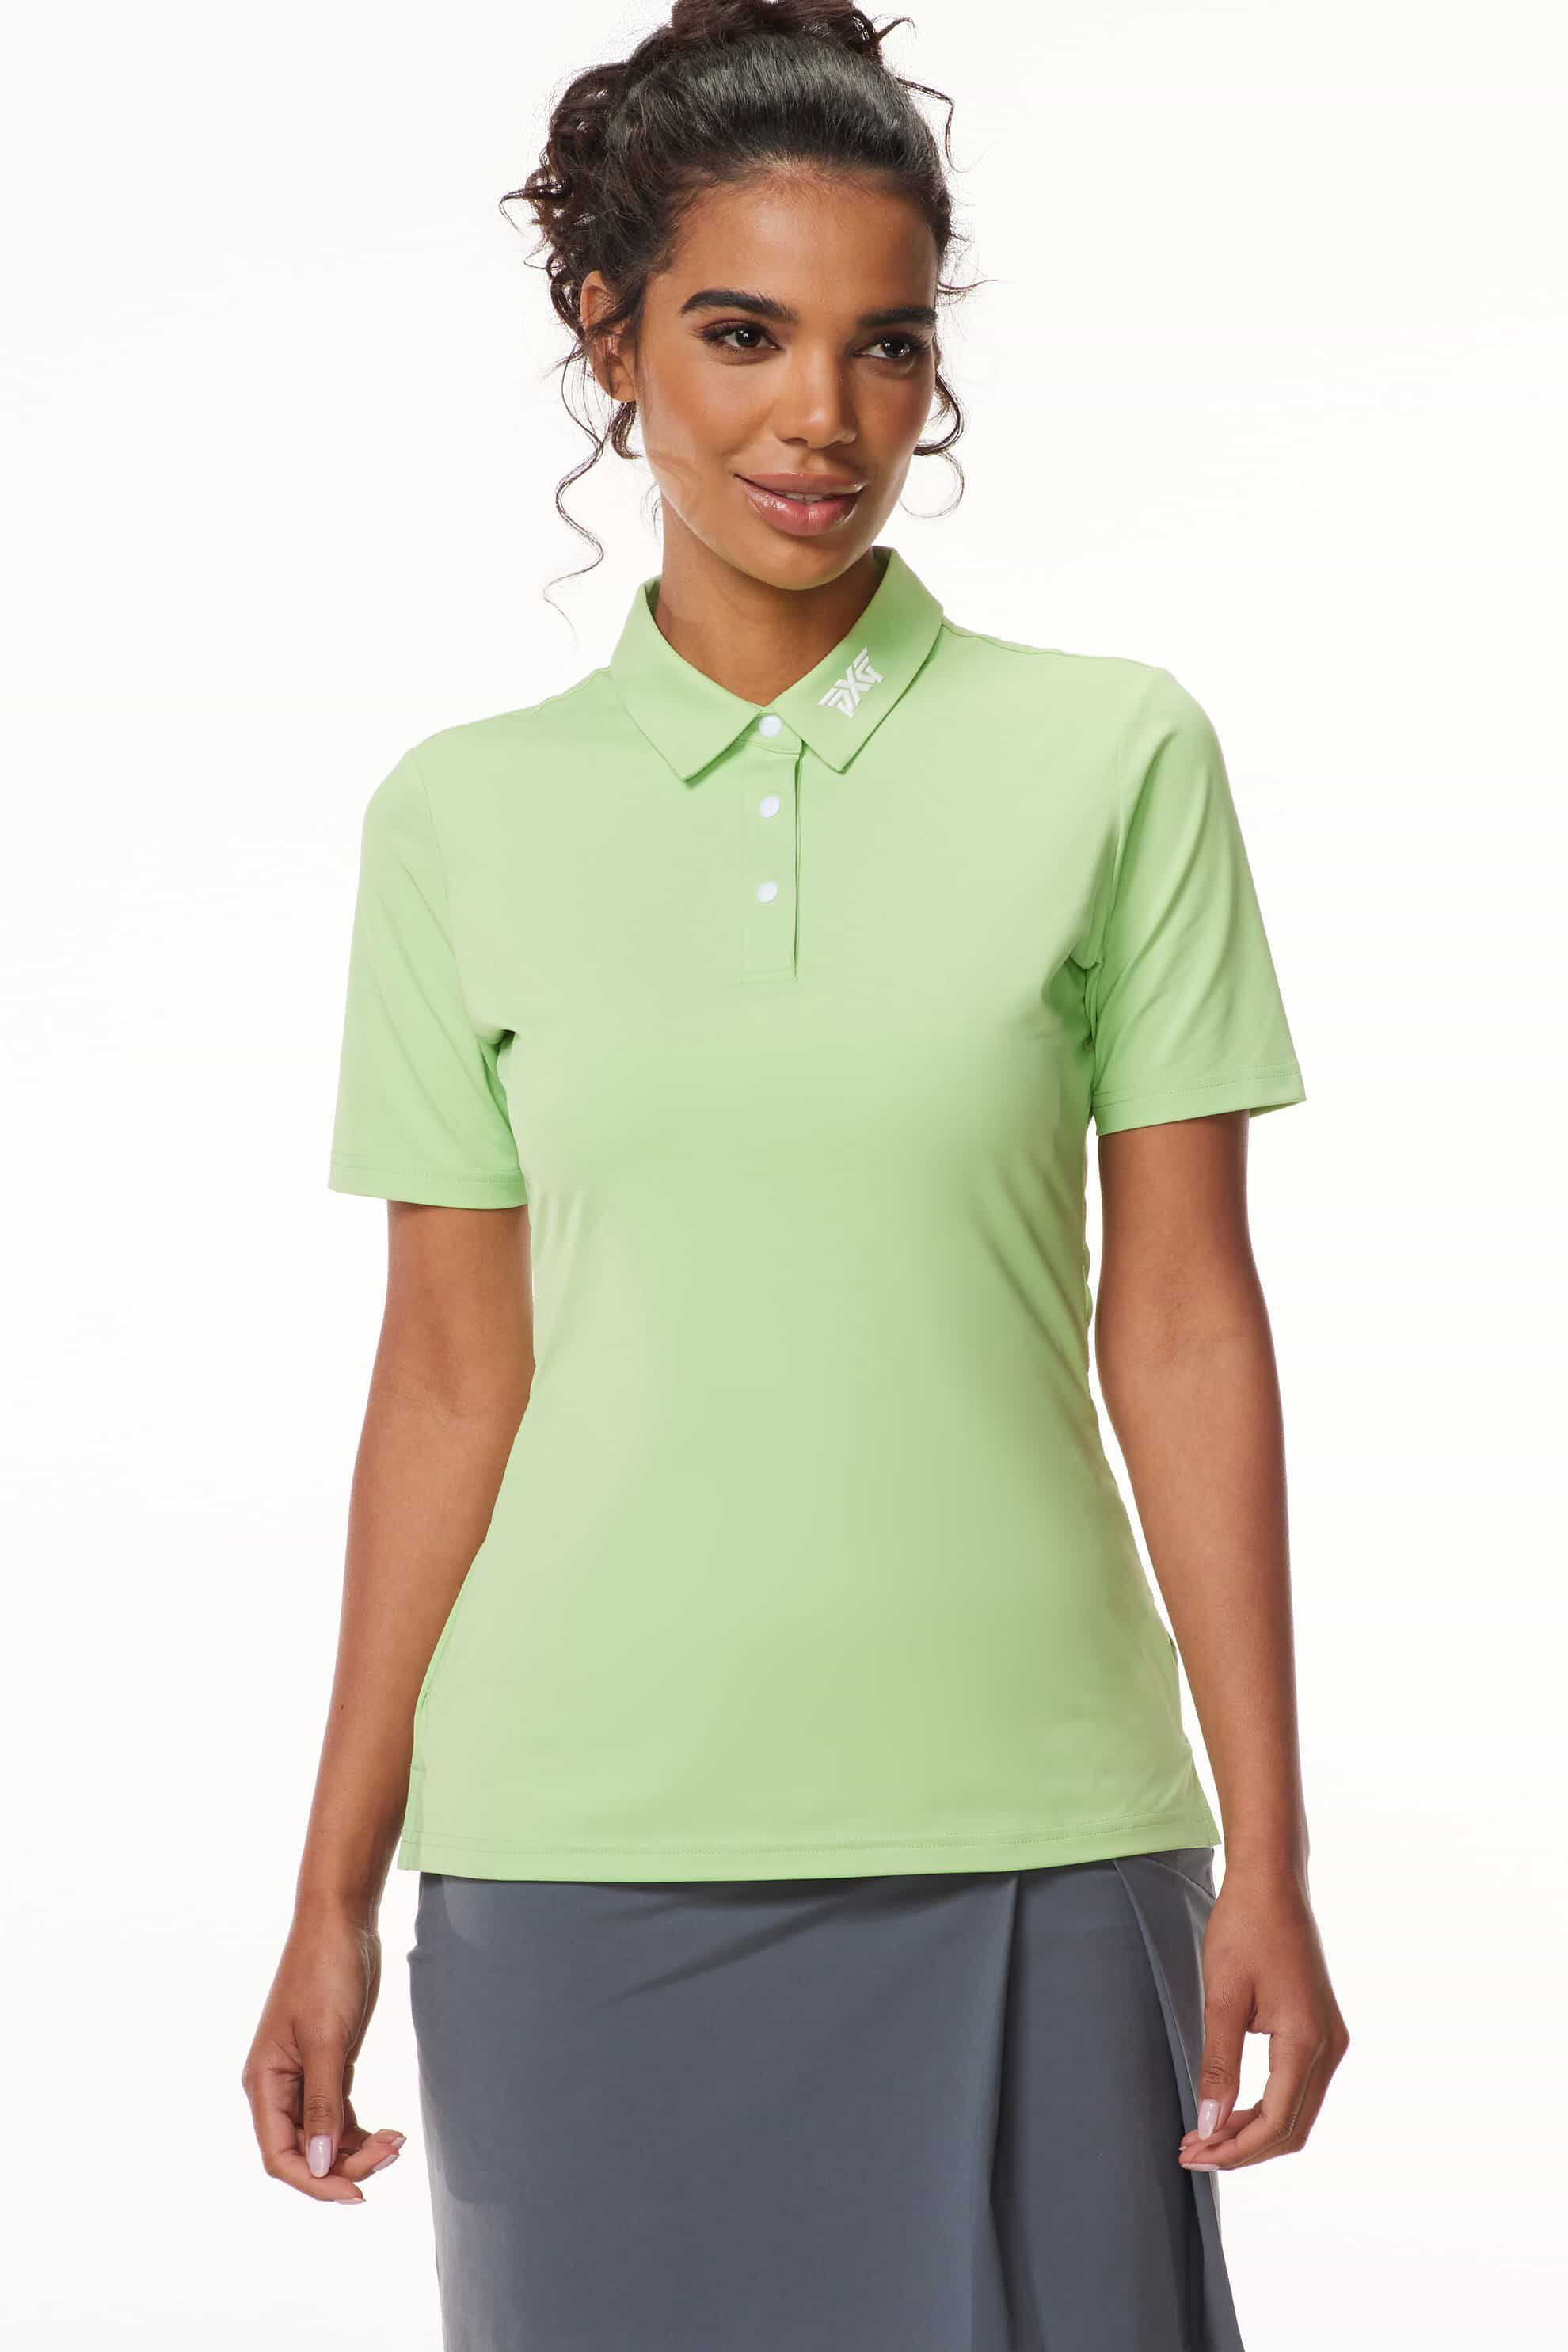 Shop Women's Golf Shirts & Polos | PXG